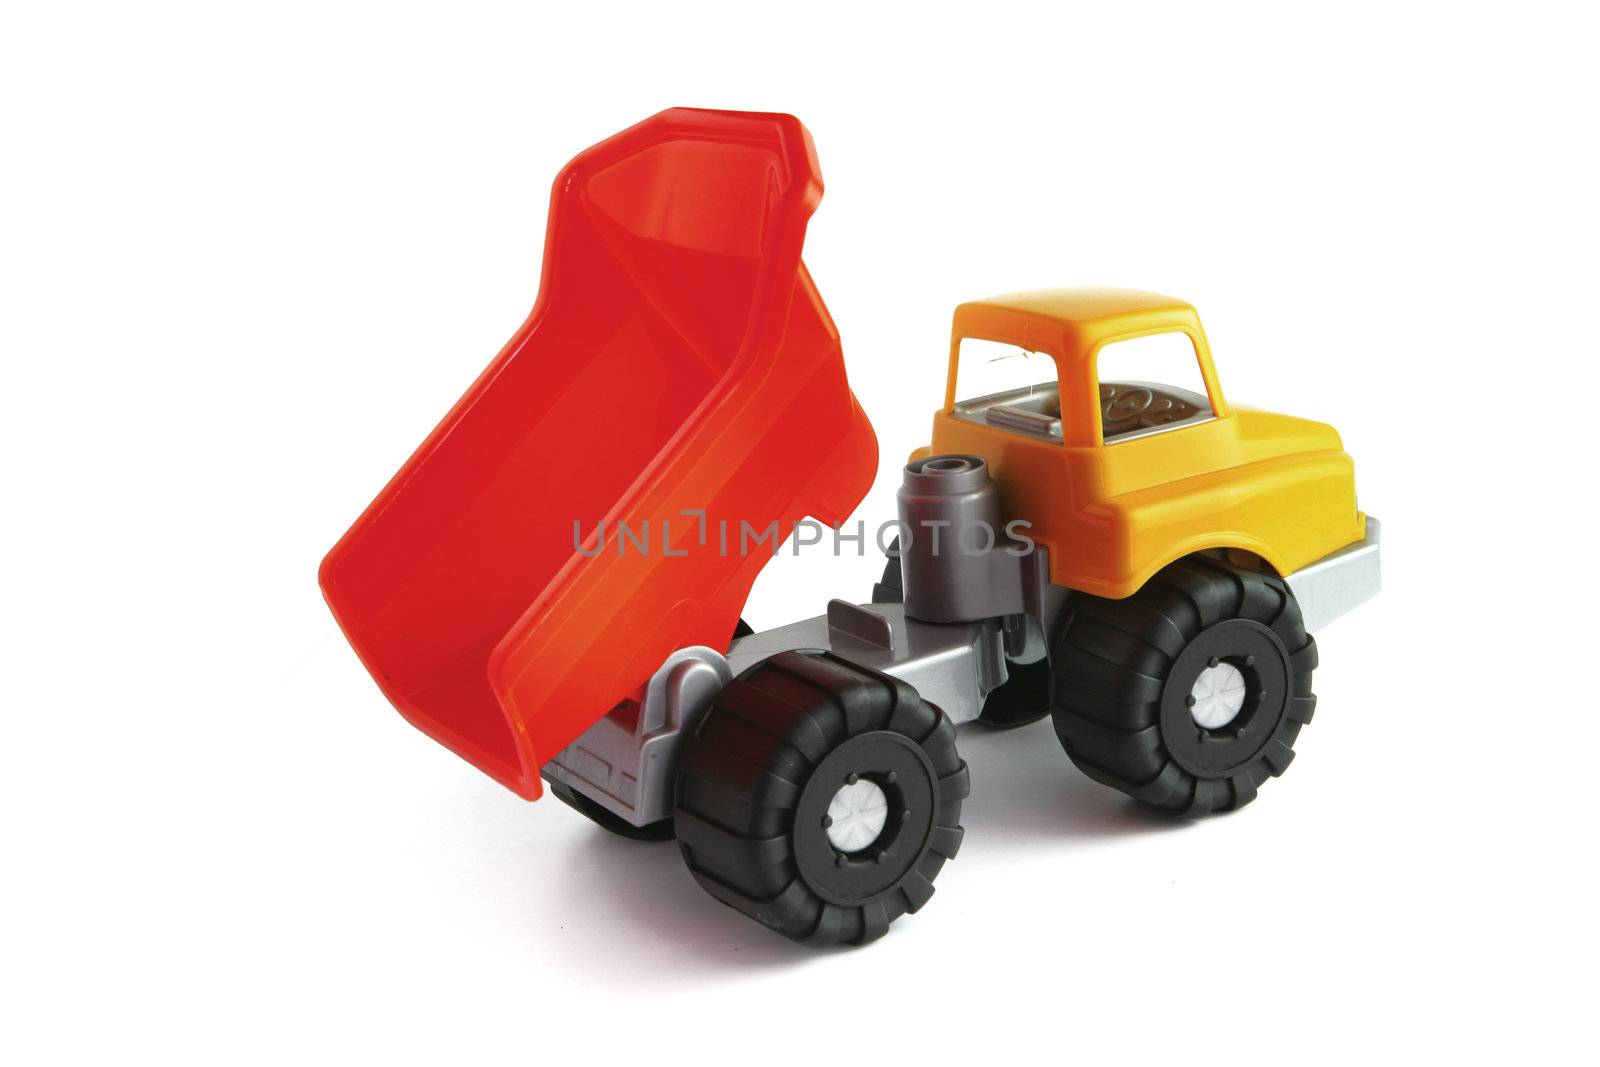 Toy dumper truck by phovoir